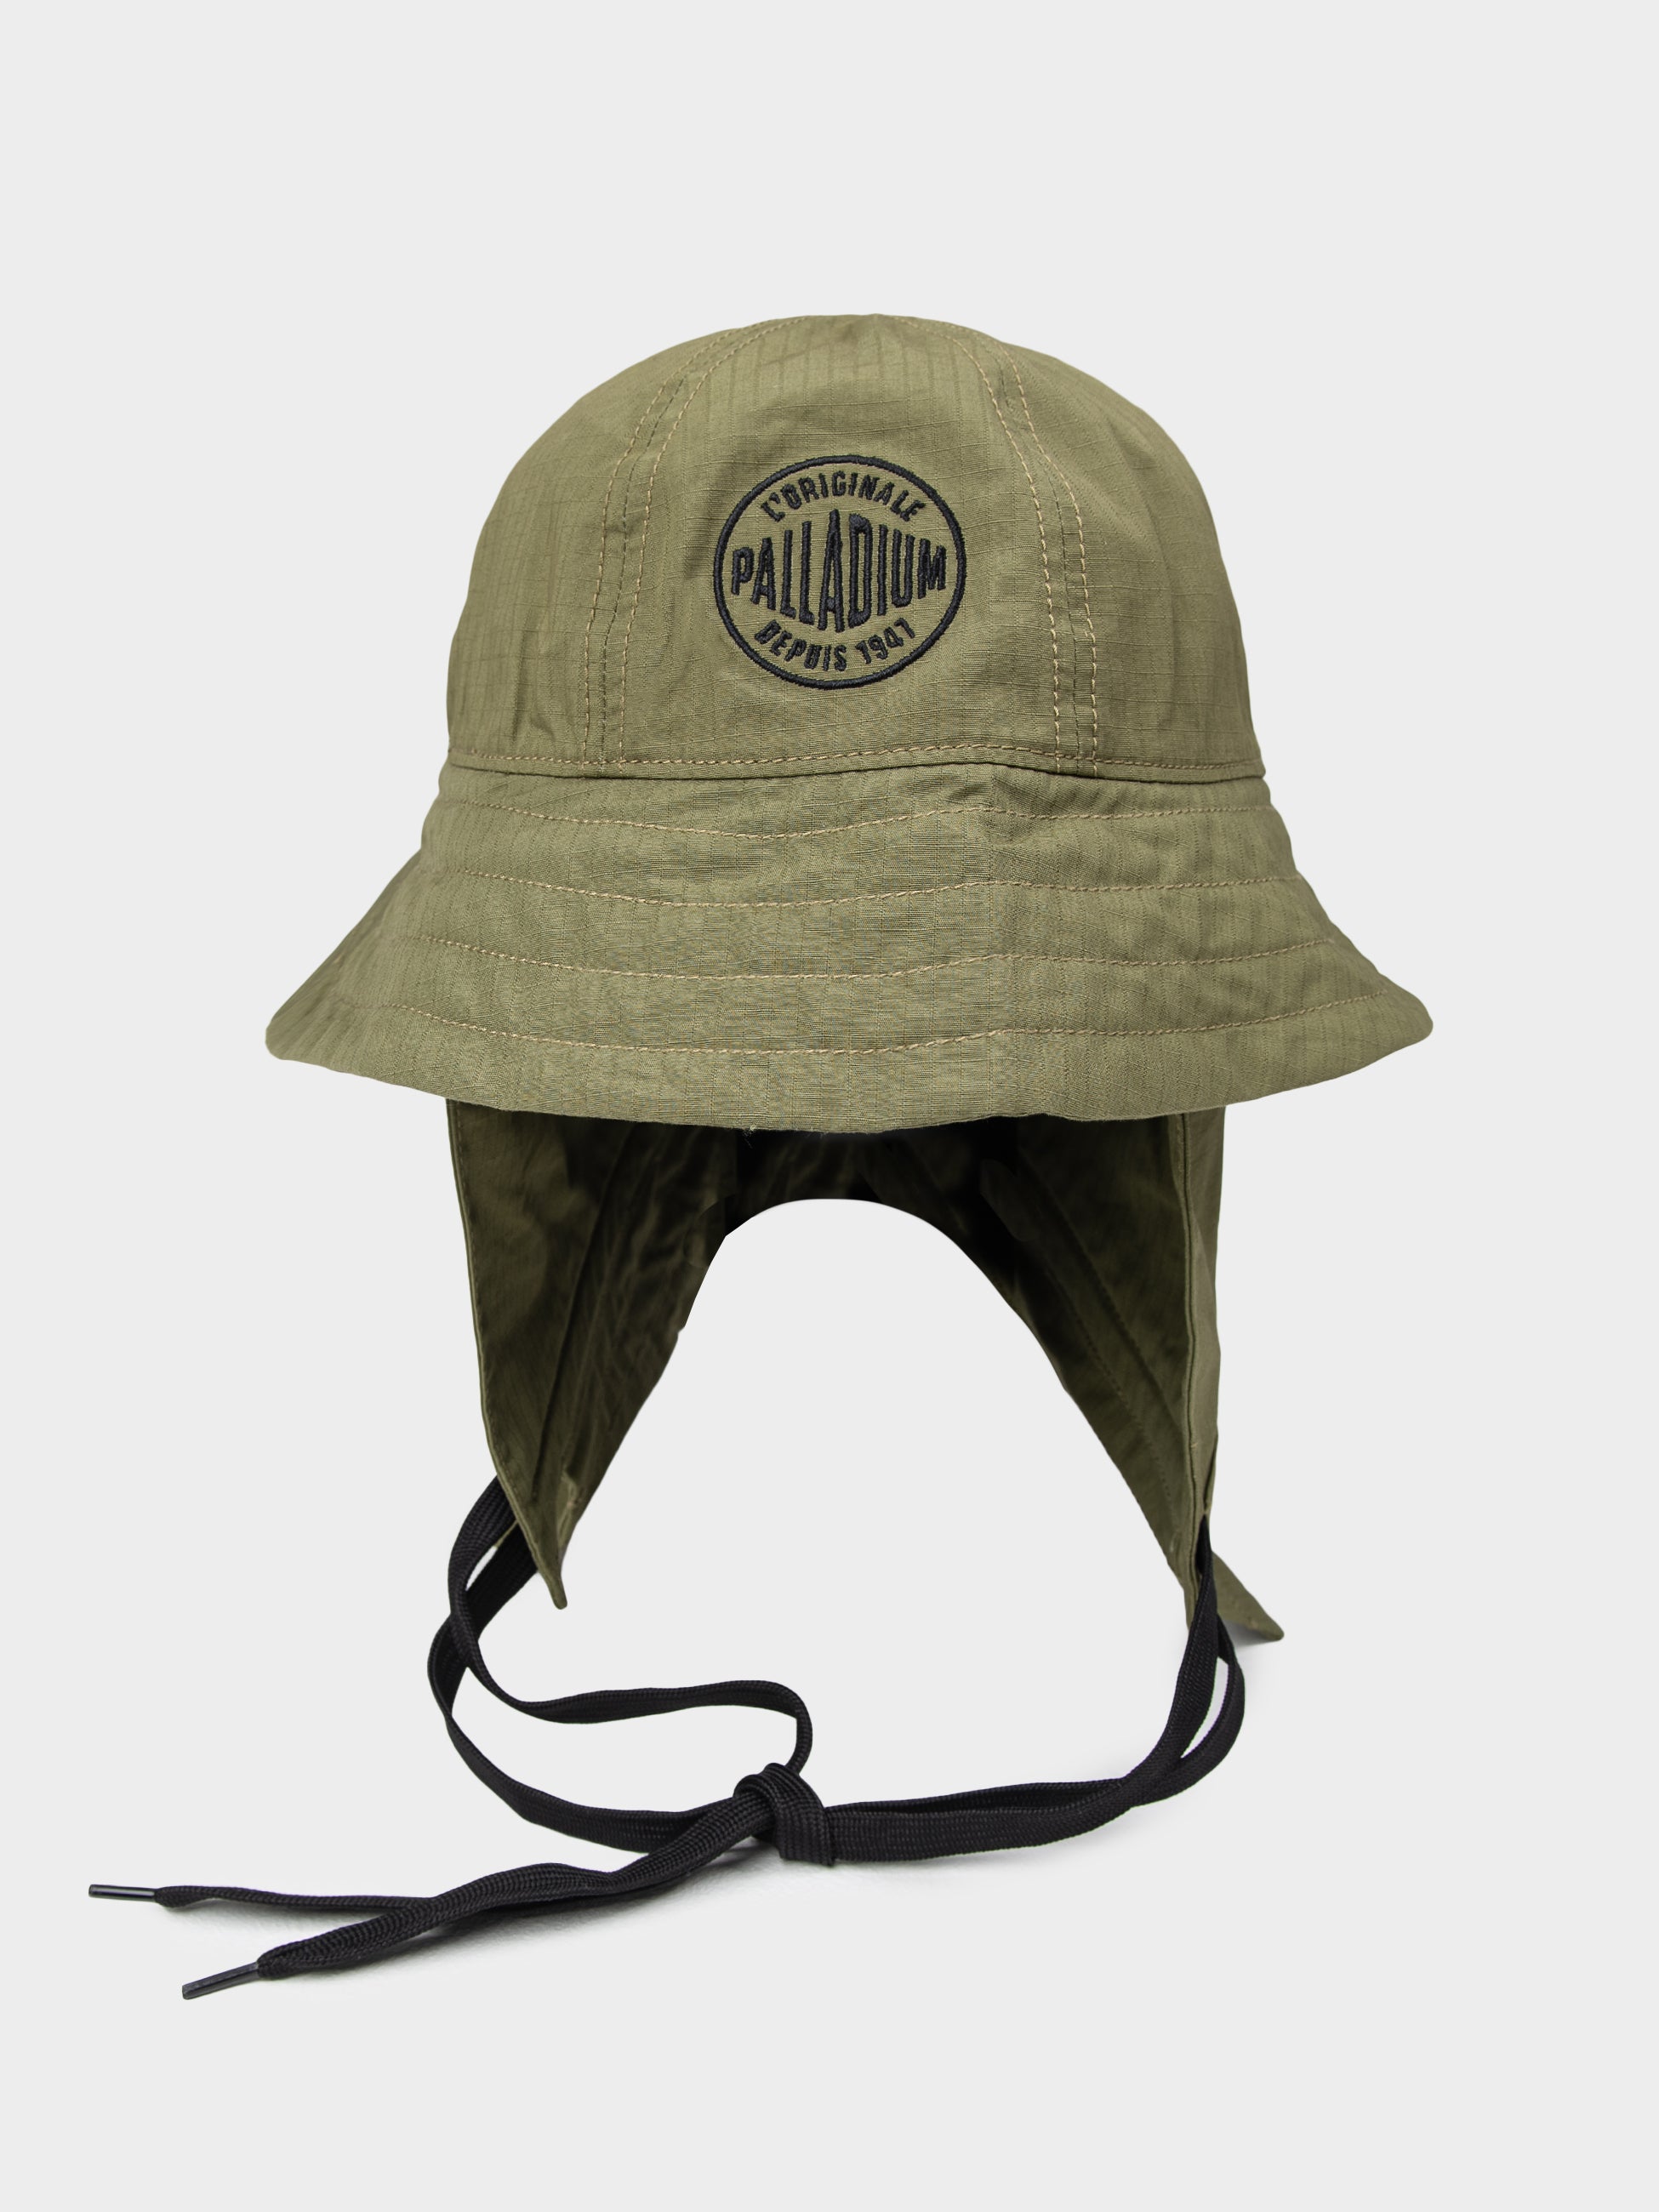 SunBlock Cap / Desert Cap : STIKAGE